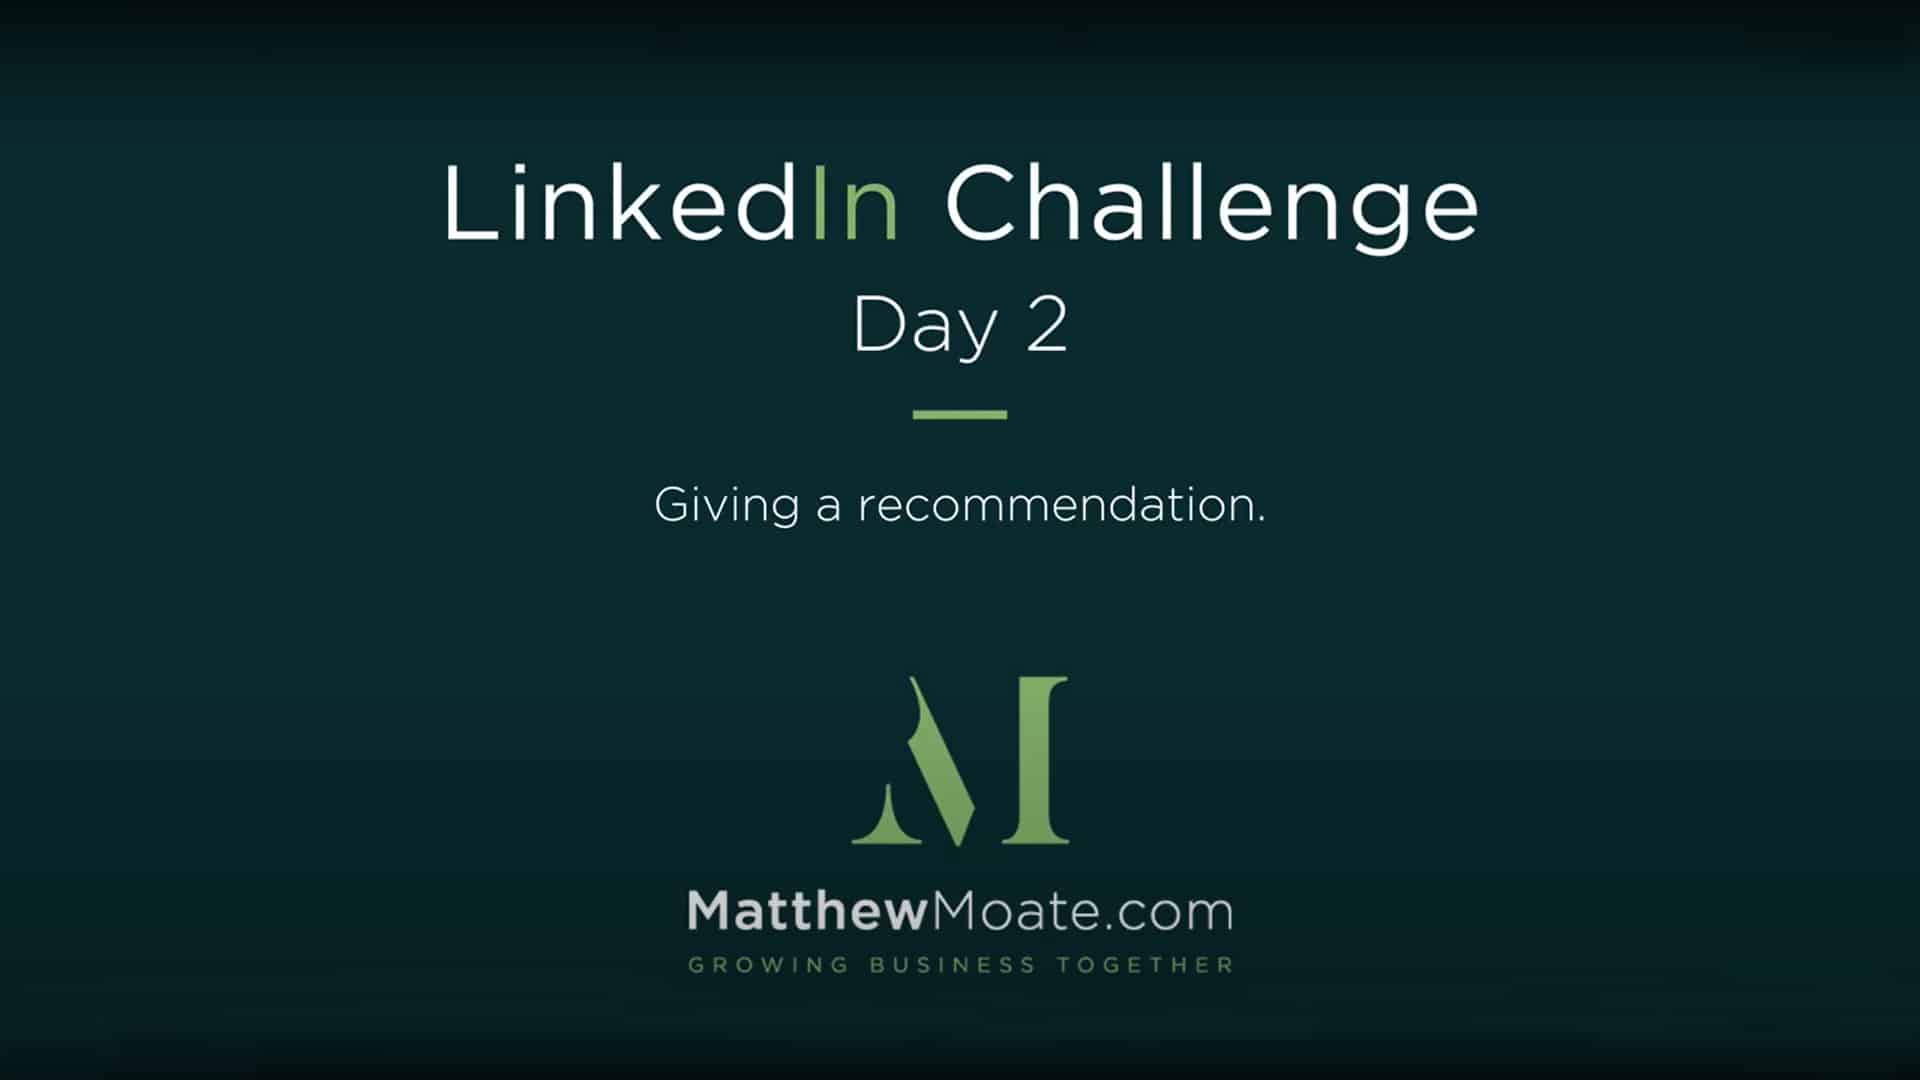 Matthew Moate's LinkedIn Challenge DAY 2